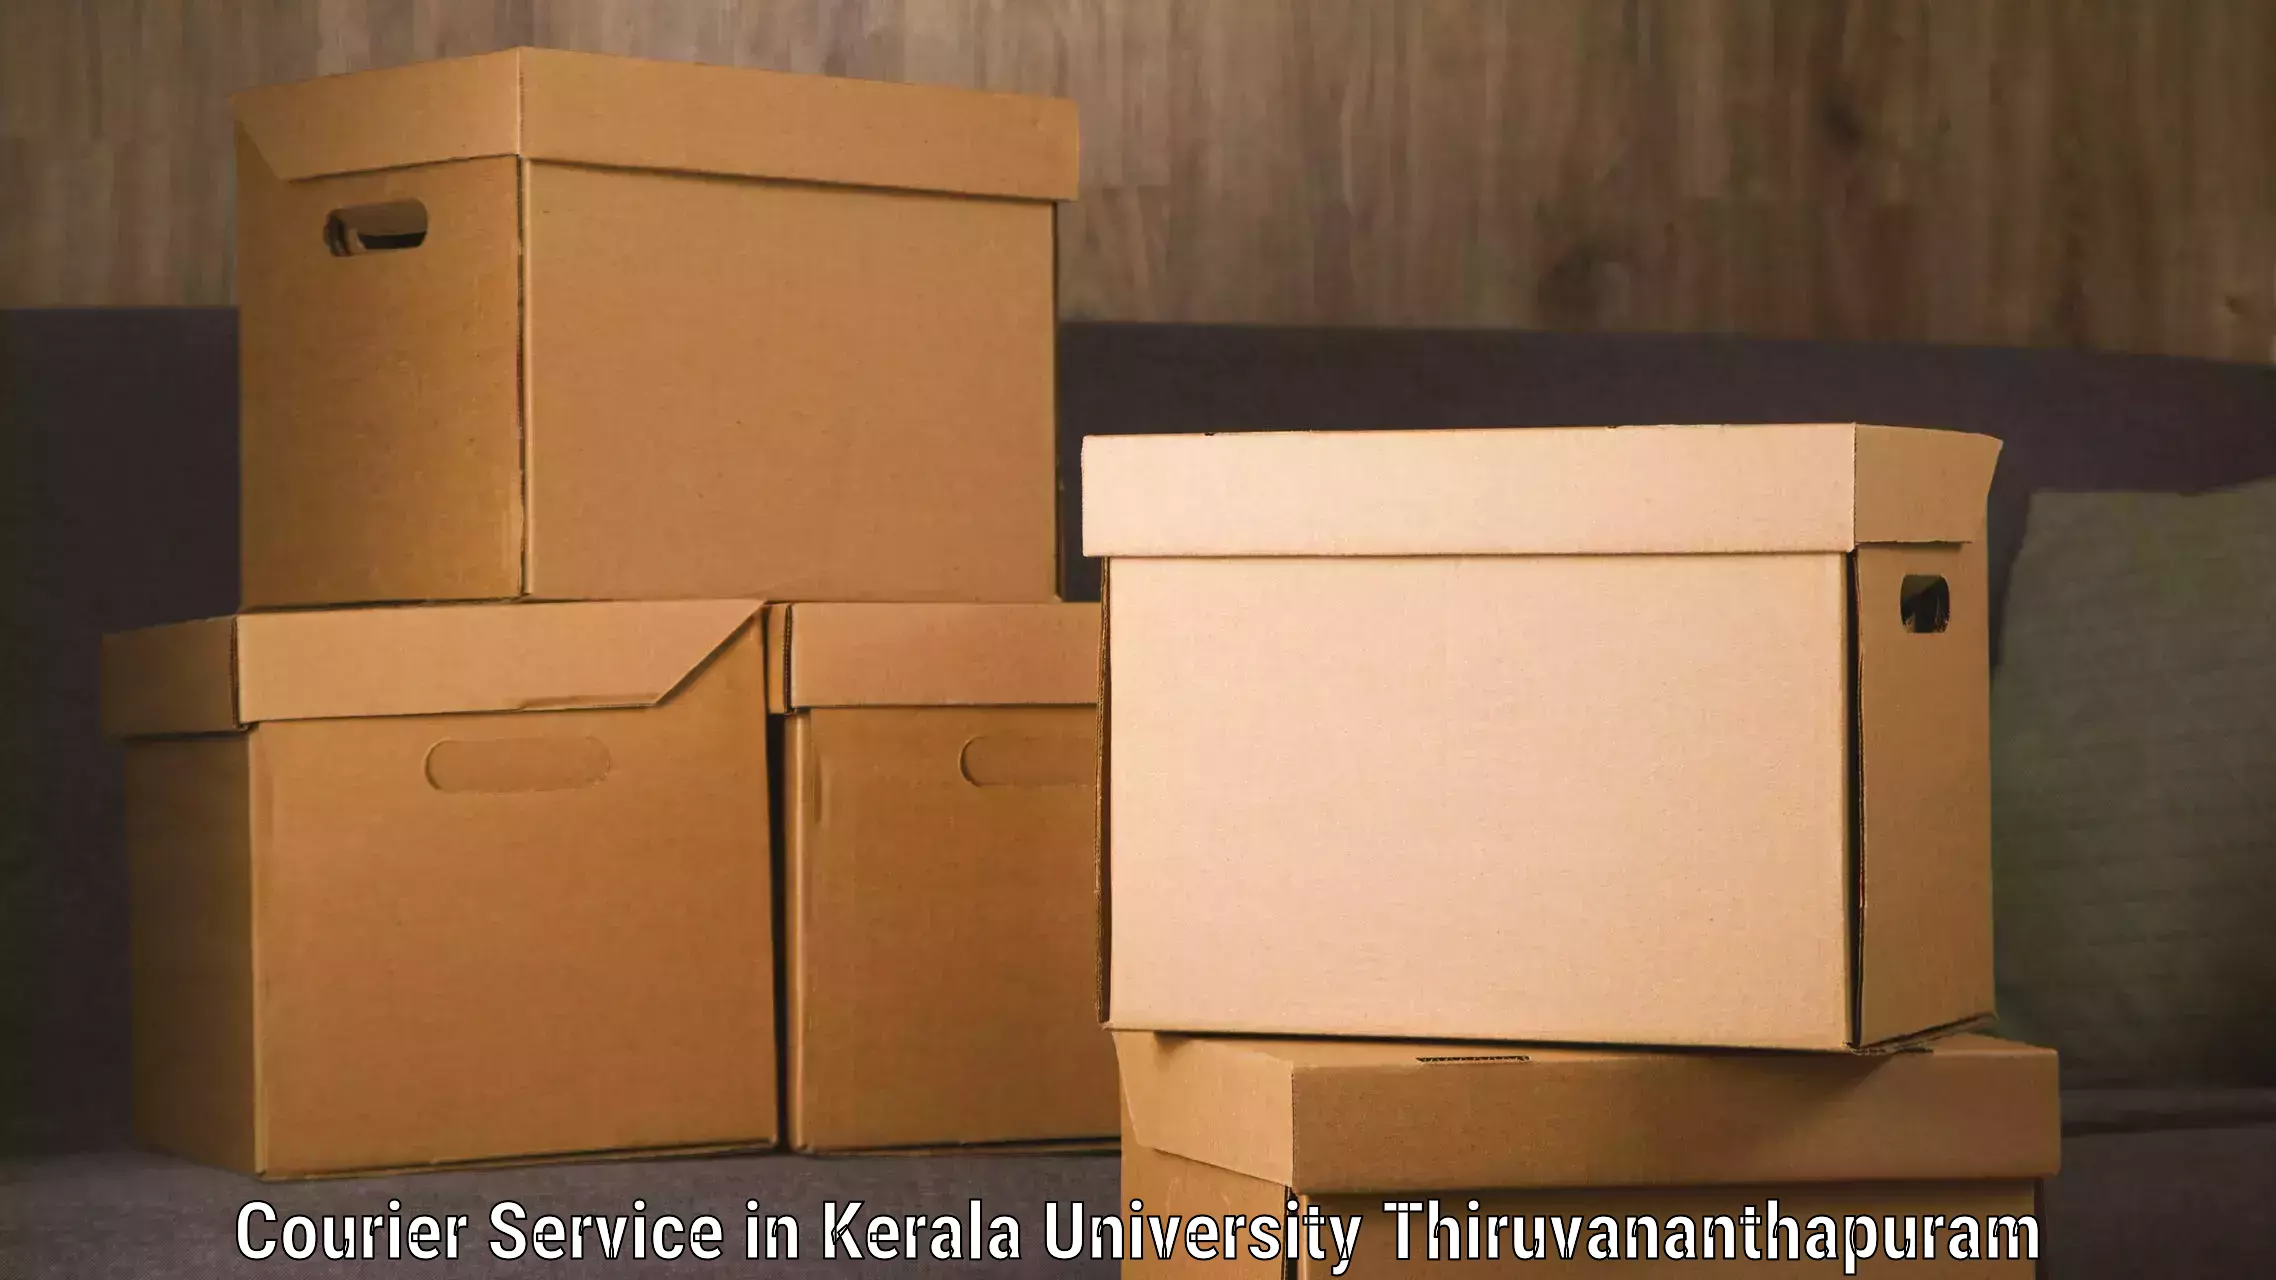 Enhanced delivery experience in Kerala University Thiruvananthapuram